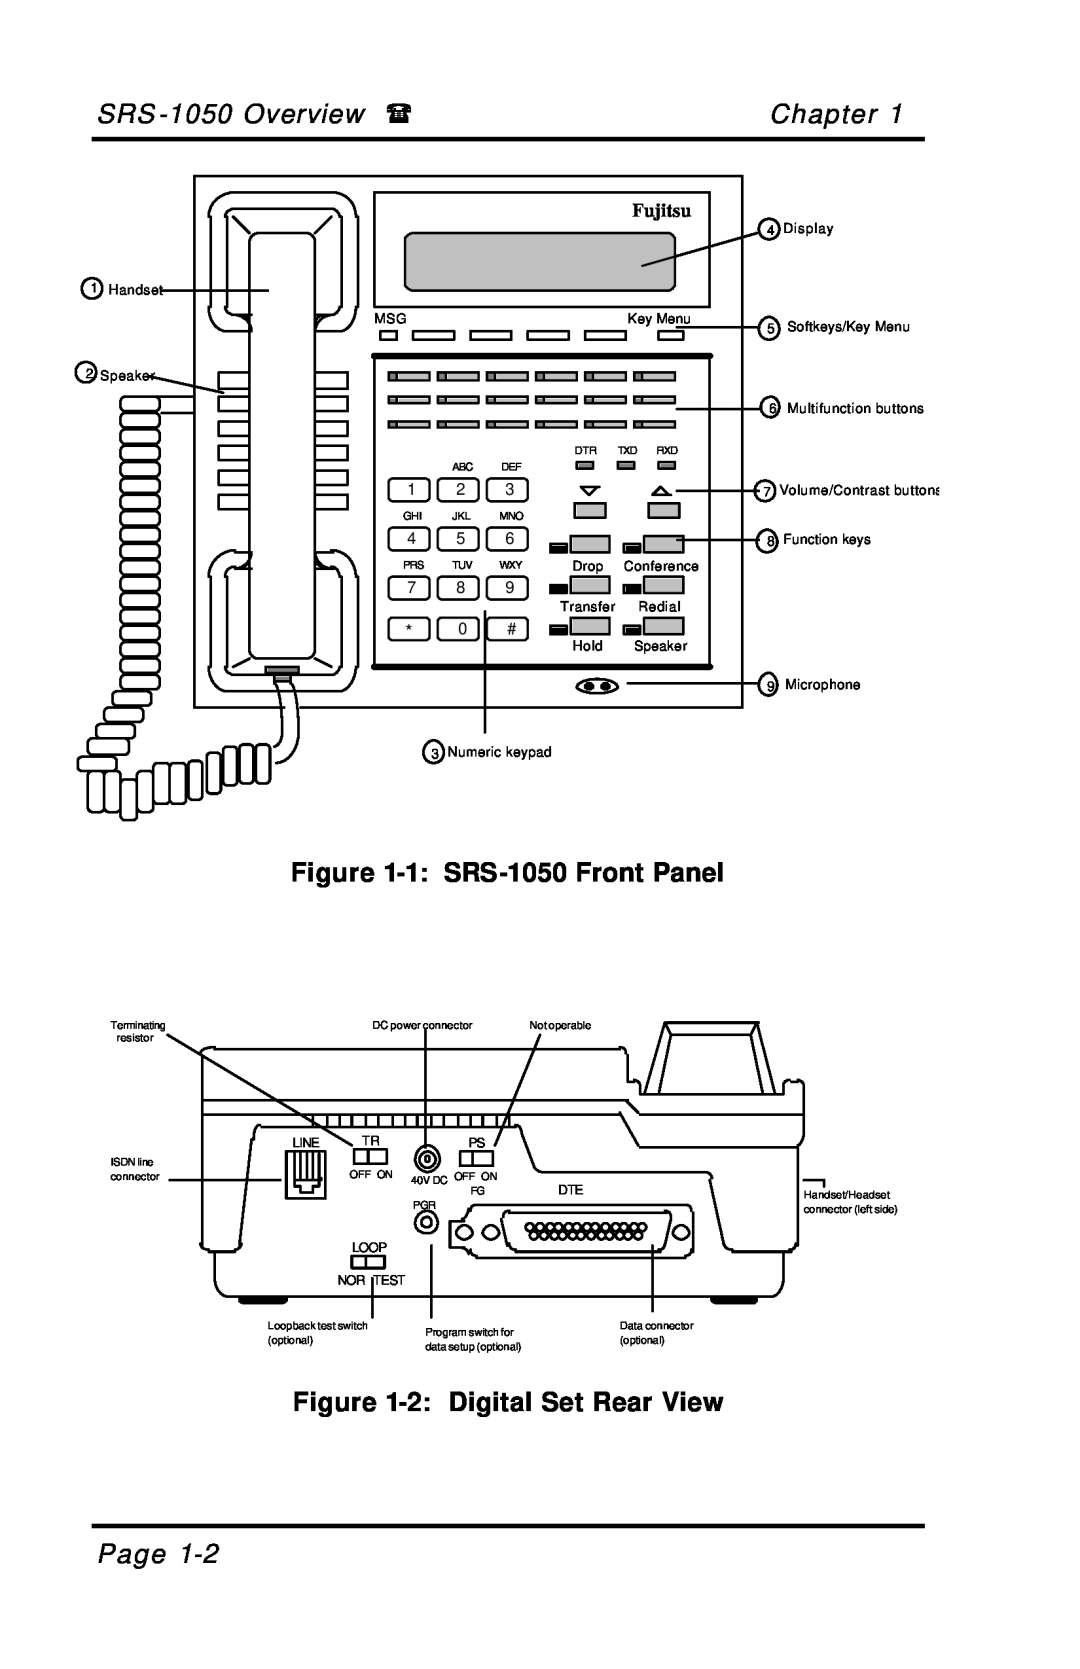 Fujitsu manual 1 SRS-1050 Front Panel, 2 Digital Set Rear View, Fujitsu 